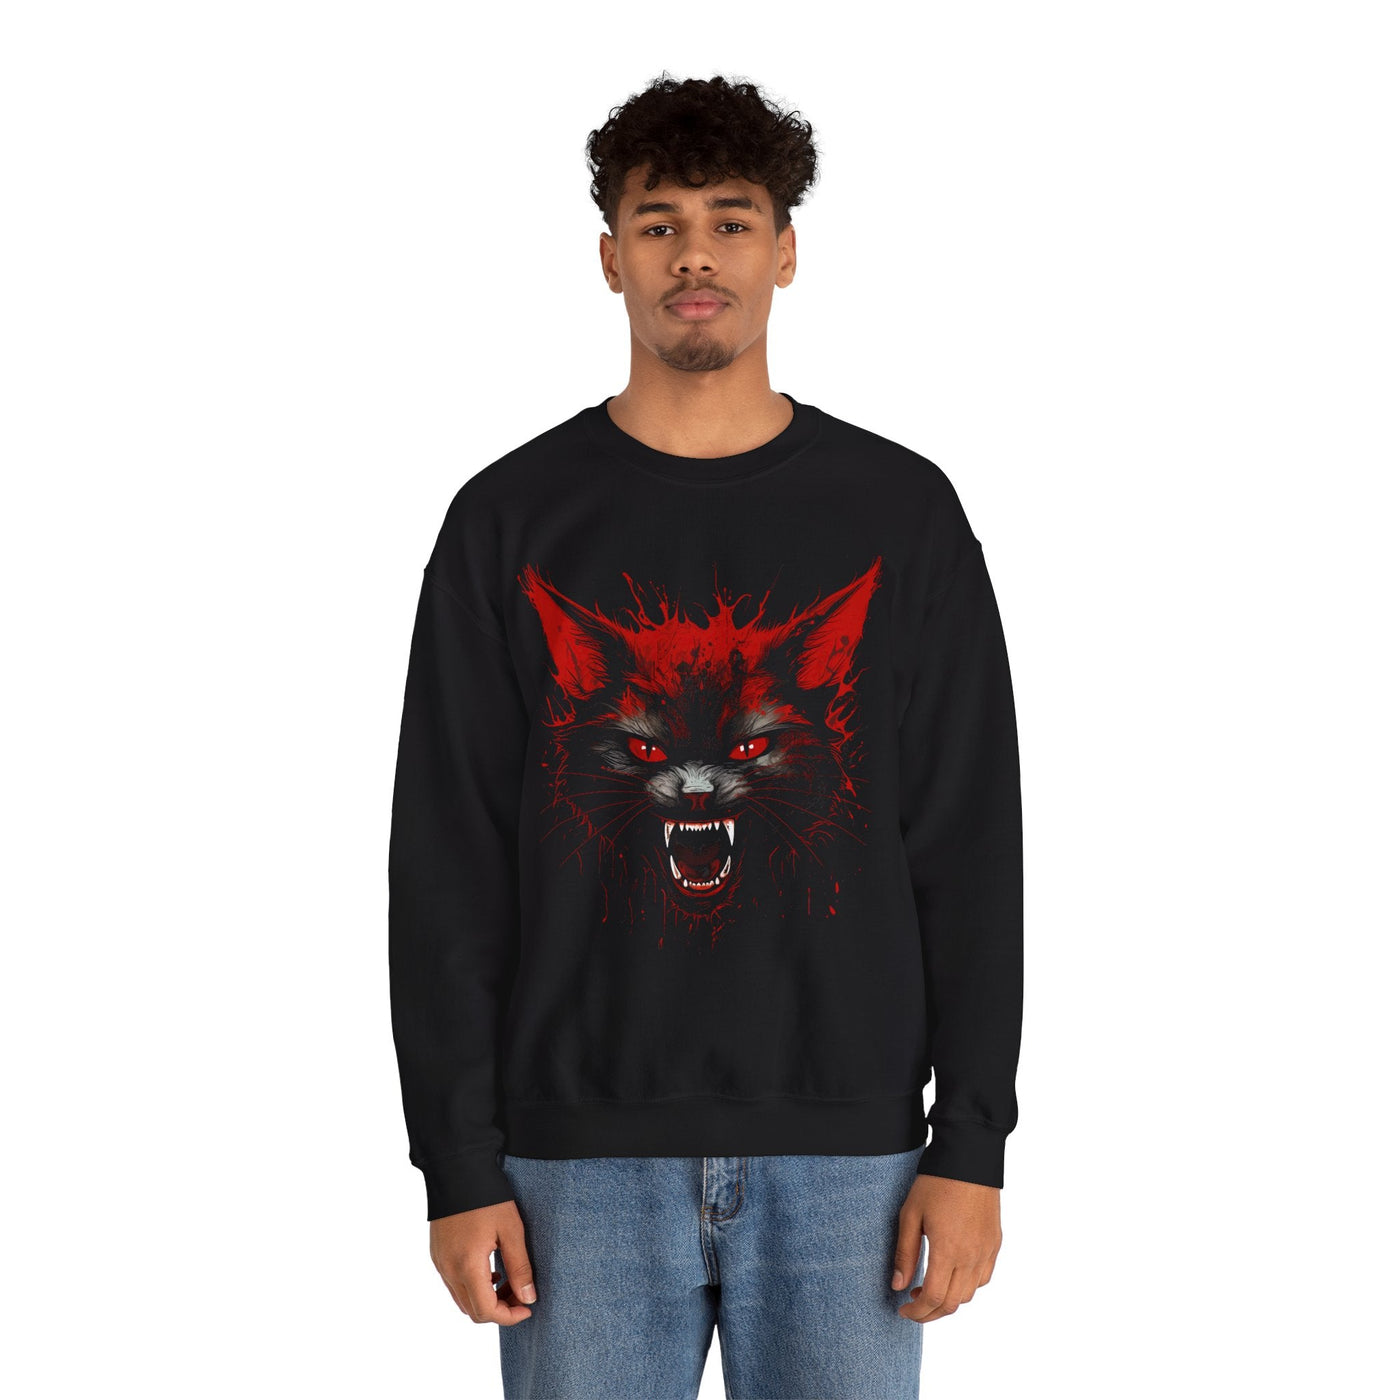 The Bloody Inked Cat Sweatshirt